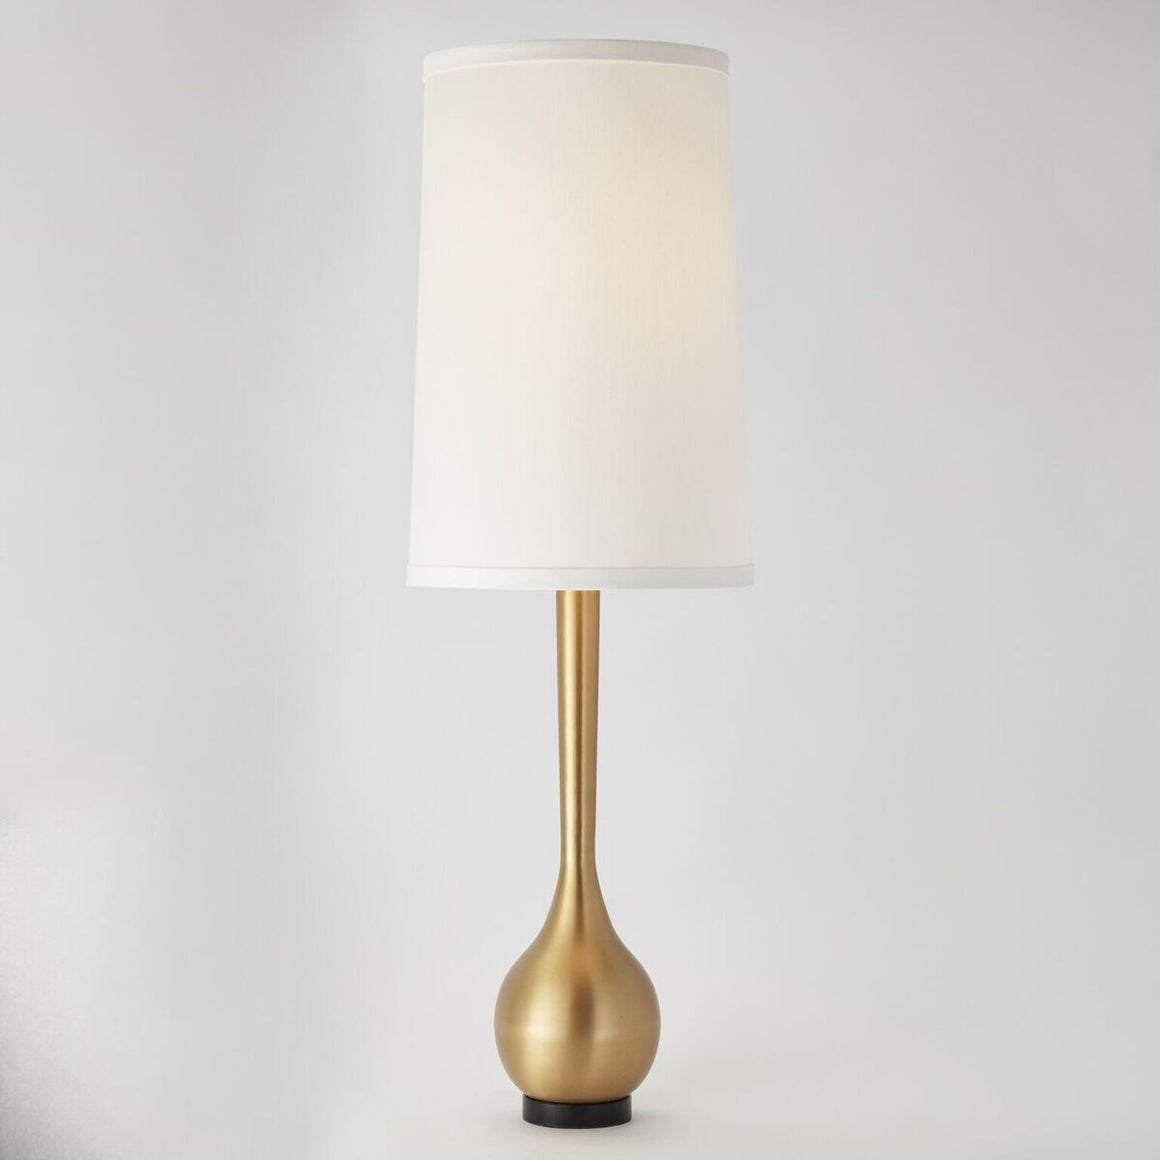 Tall Modern Table Lamp – Antique Brass